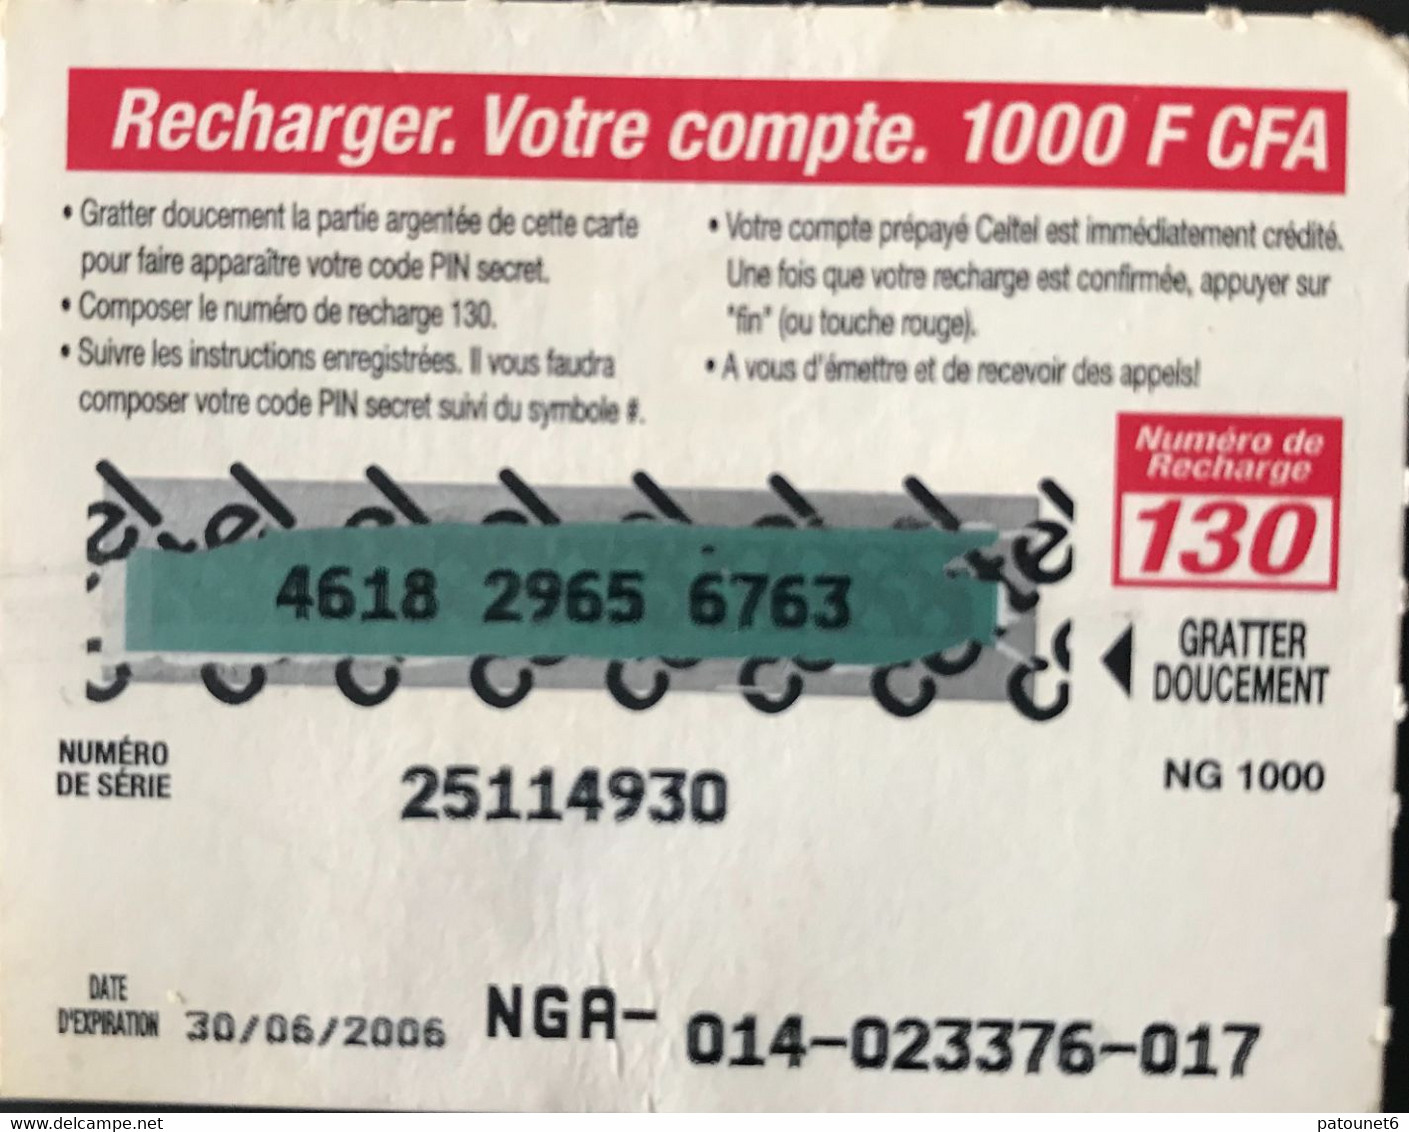 NIGER - Recharge (small) - Celtel - 1000 F CFA - Niger